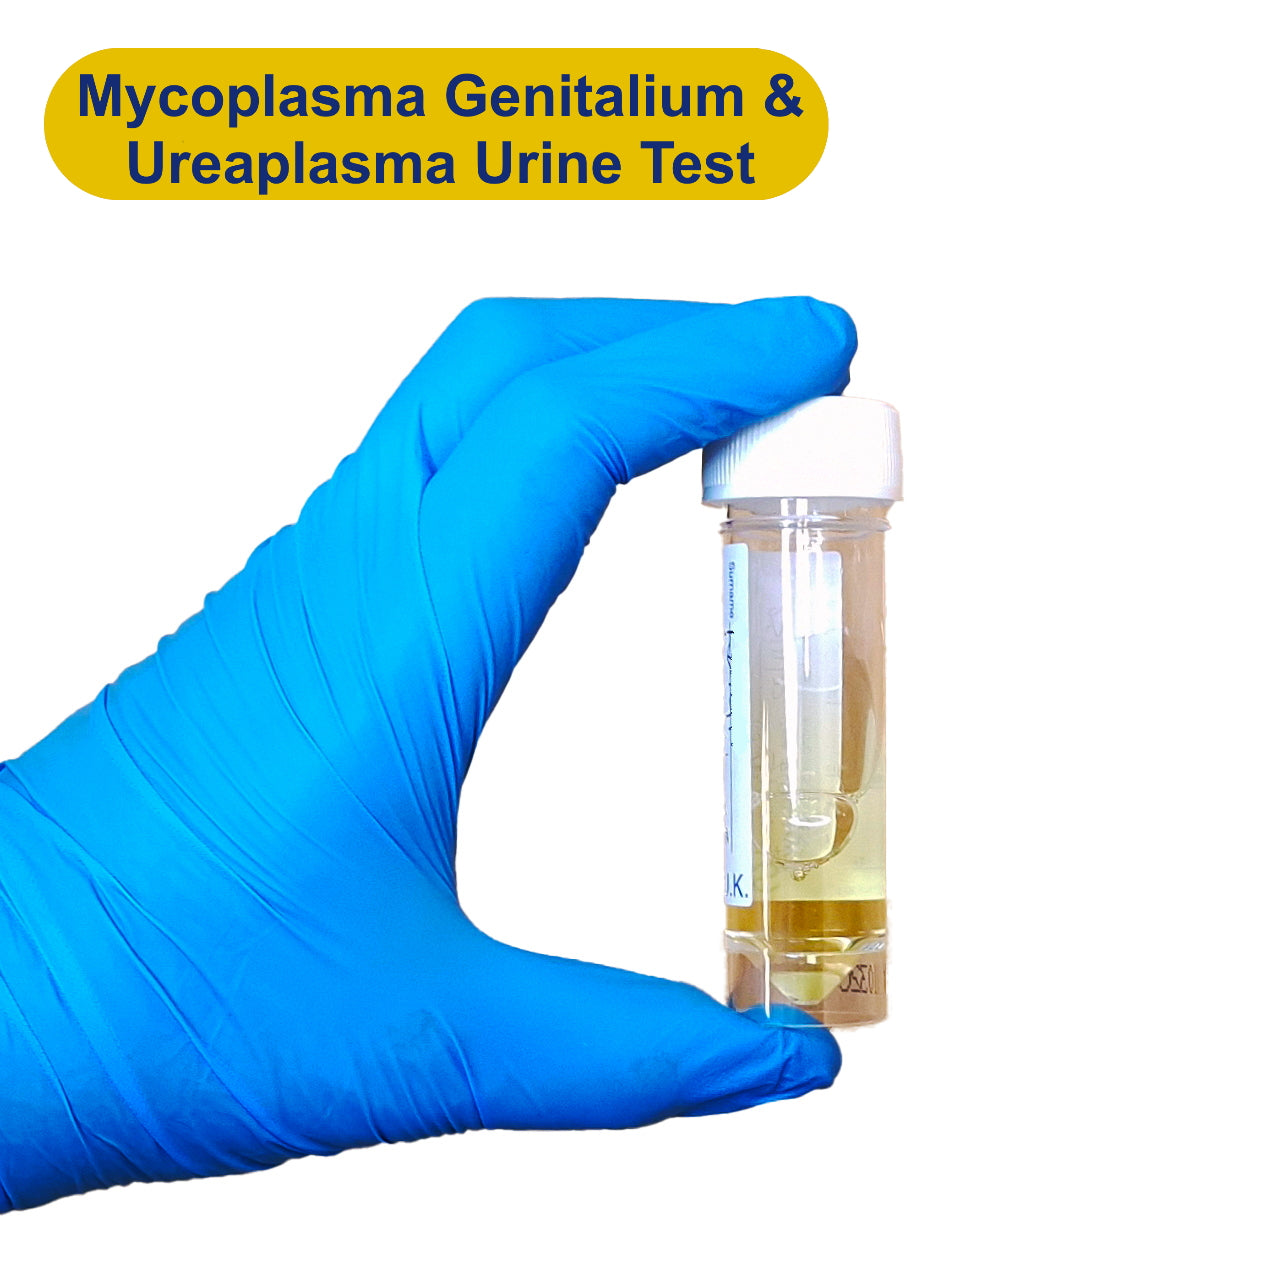 Mycoplasma genitalium & Ureaplasma Urine Test (PCR)